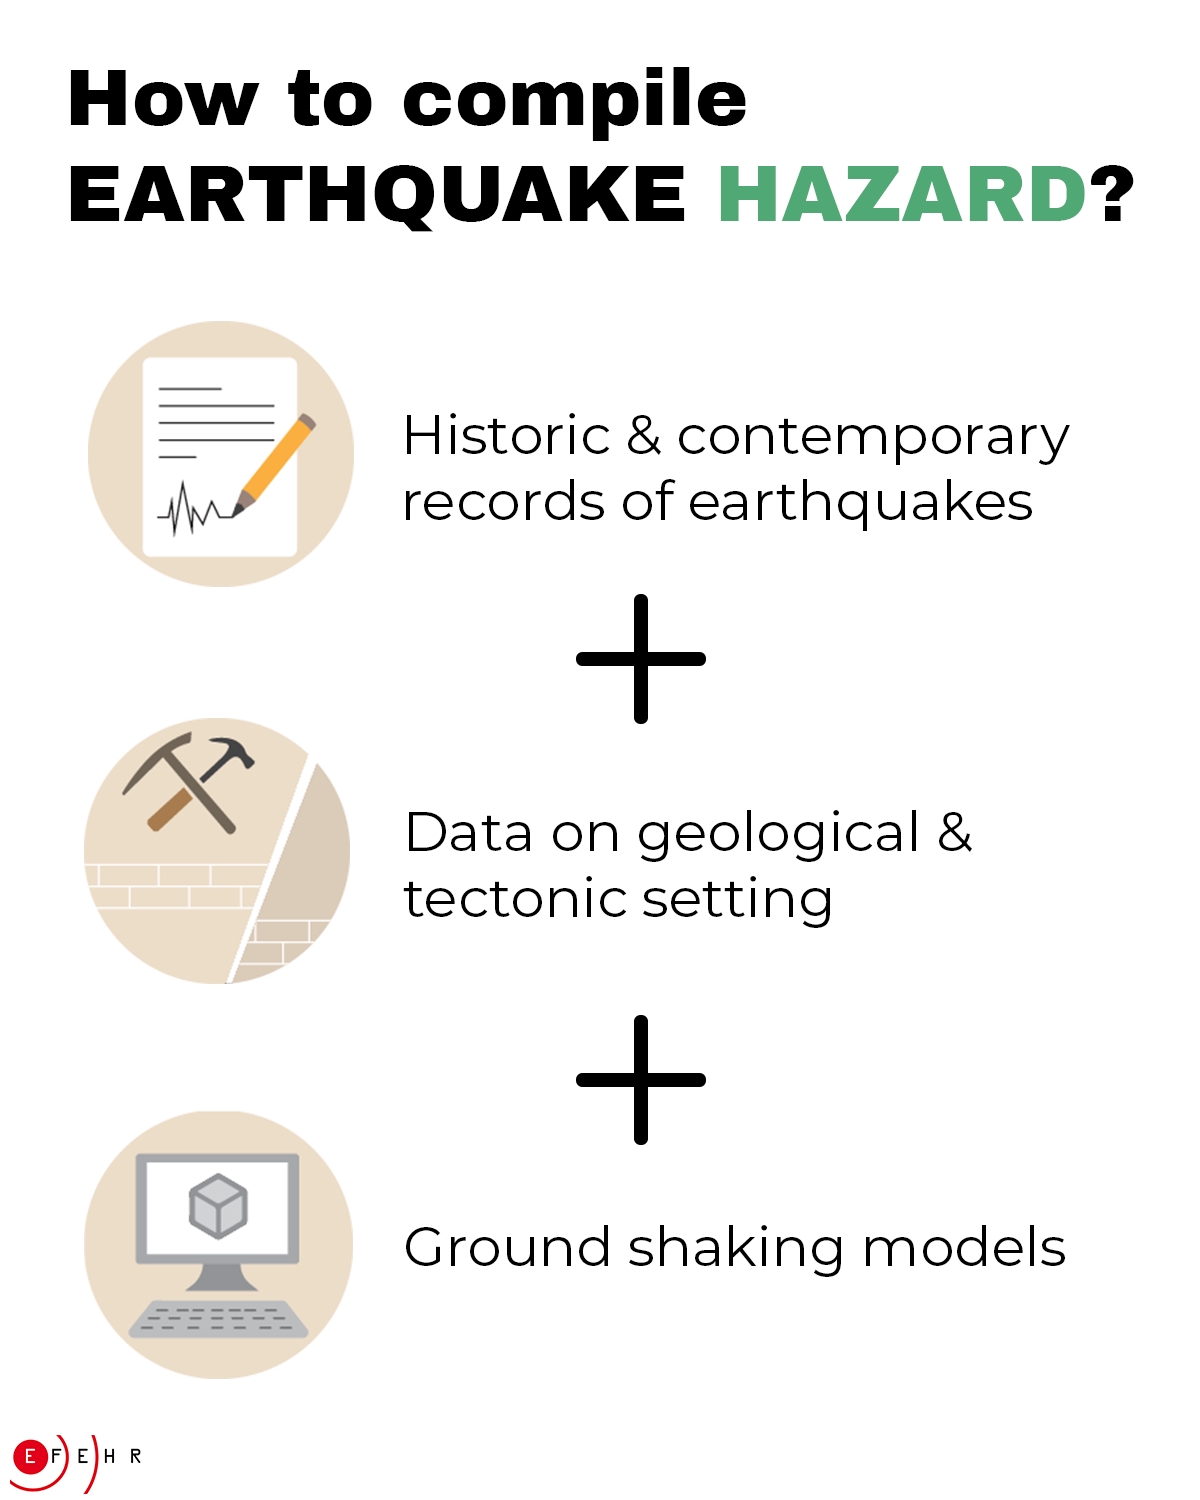 What is earthquake hazard?